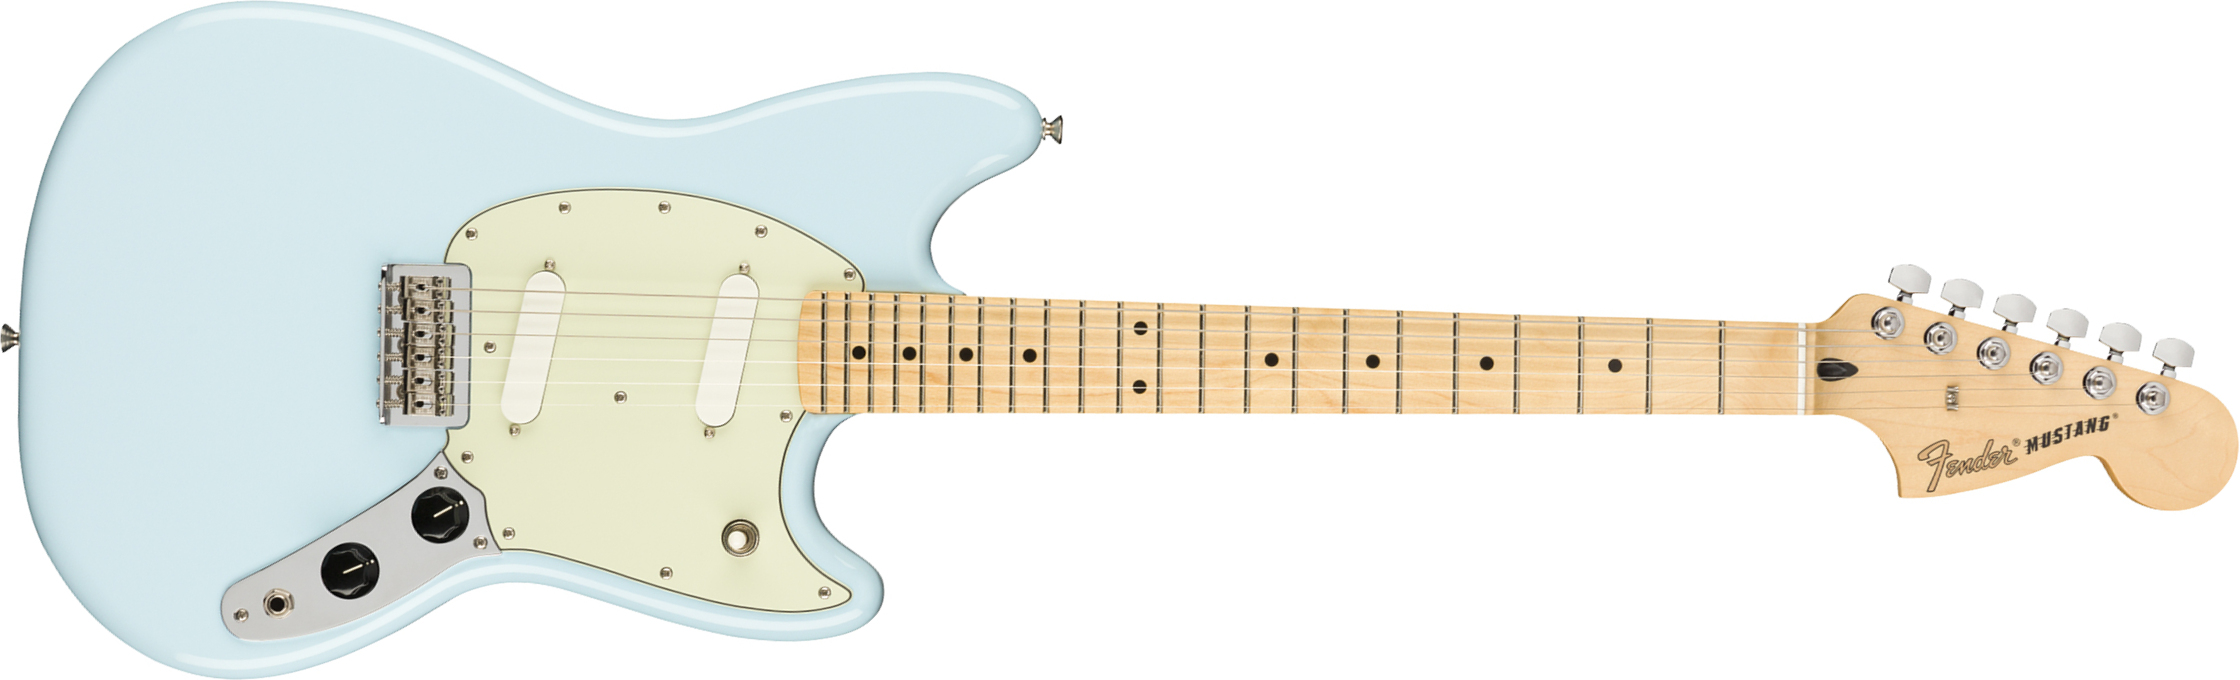 Fender Mustang Player Mex Ht Ss Mn - Surf Blue - Retro-rock elektrische gitaar - Main picture